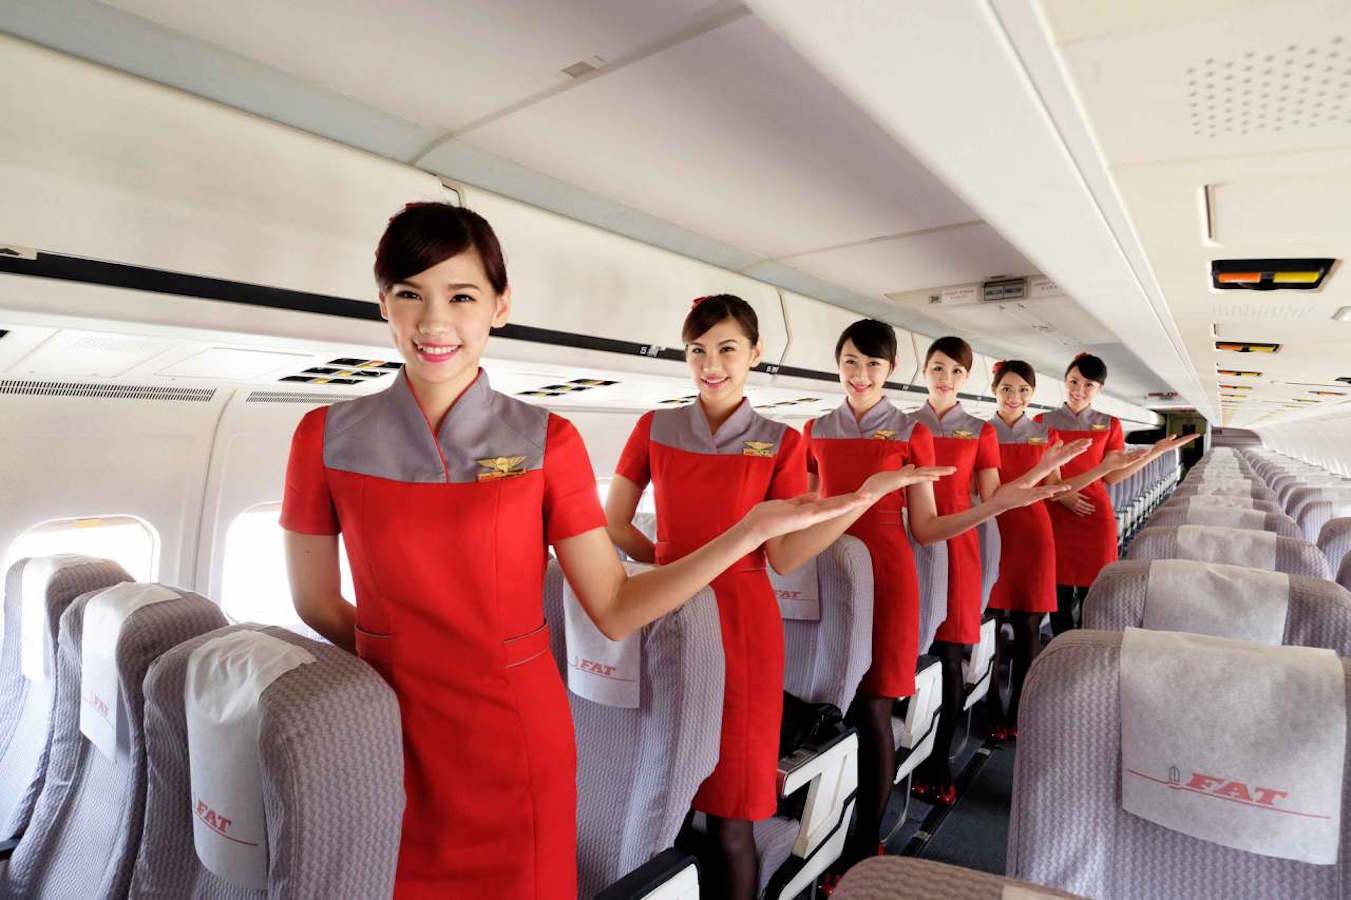 Все об официальном сайте авиакомпании china eastern airlines (mu ces)